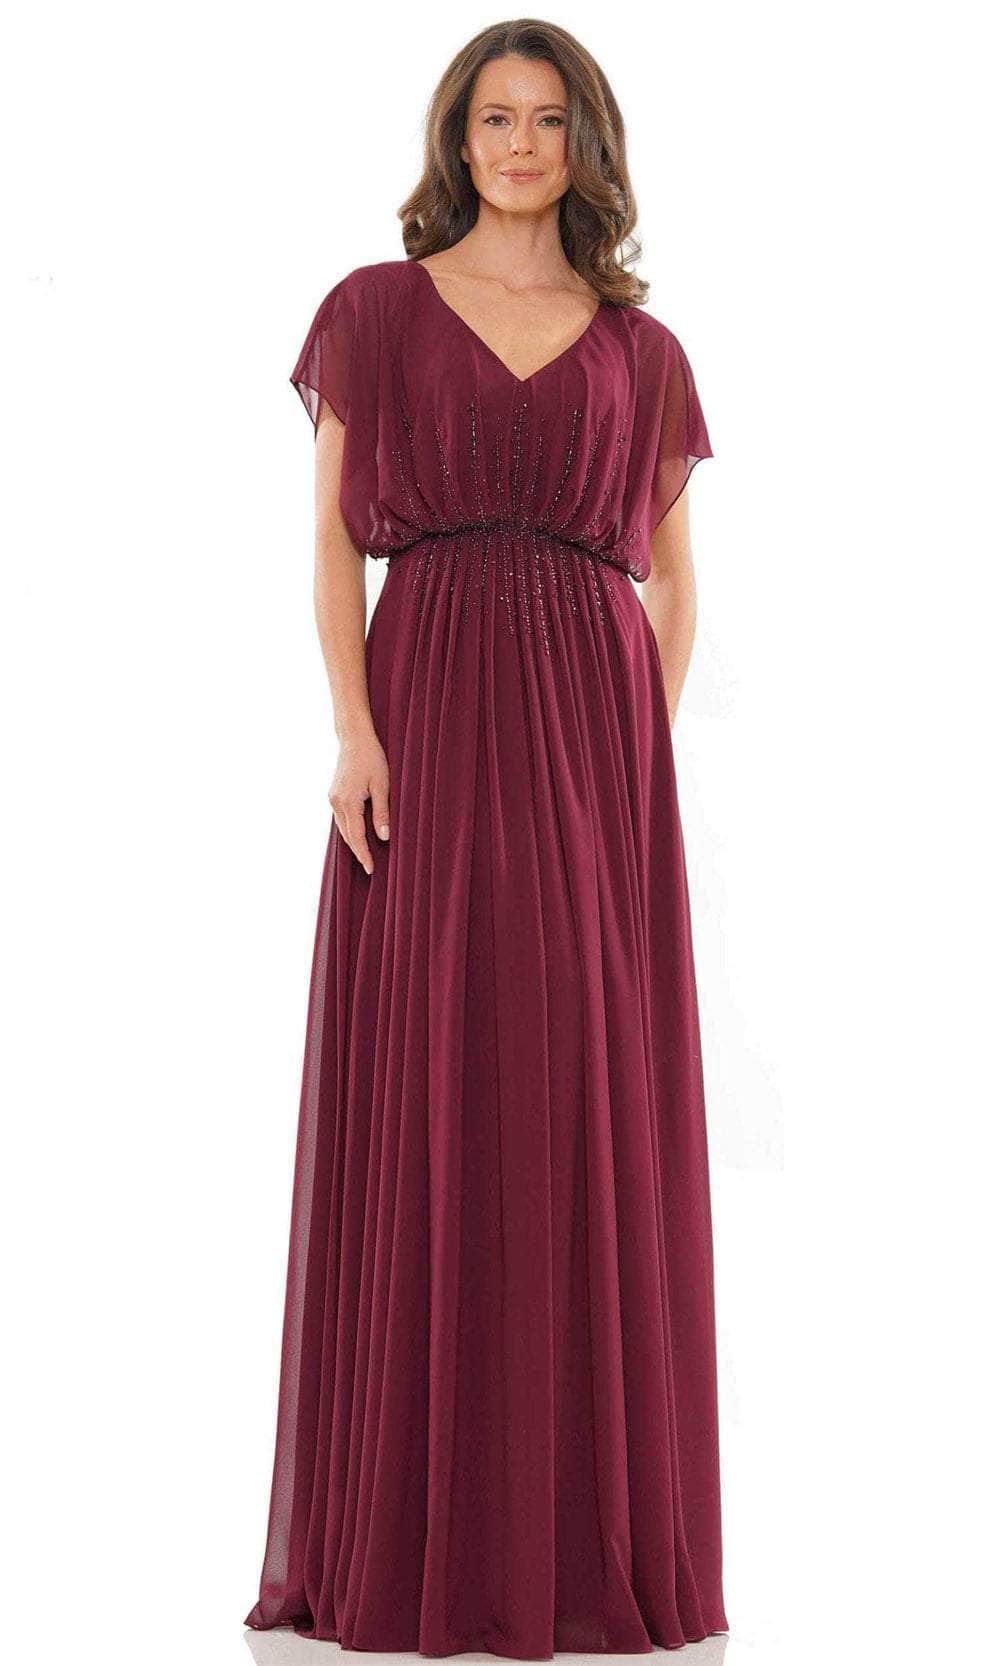 Marsoni by Colors MV1156 - Jeweled Chiffon Formal Dress Special Occasion Dress 6 / Wine